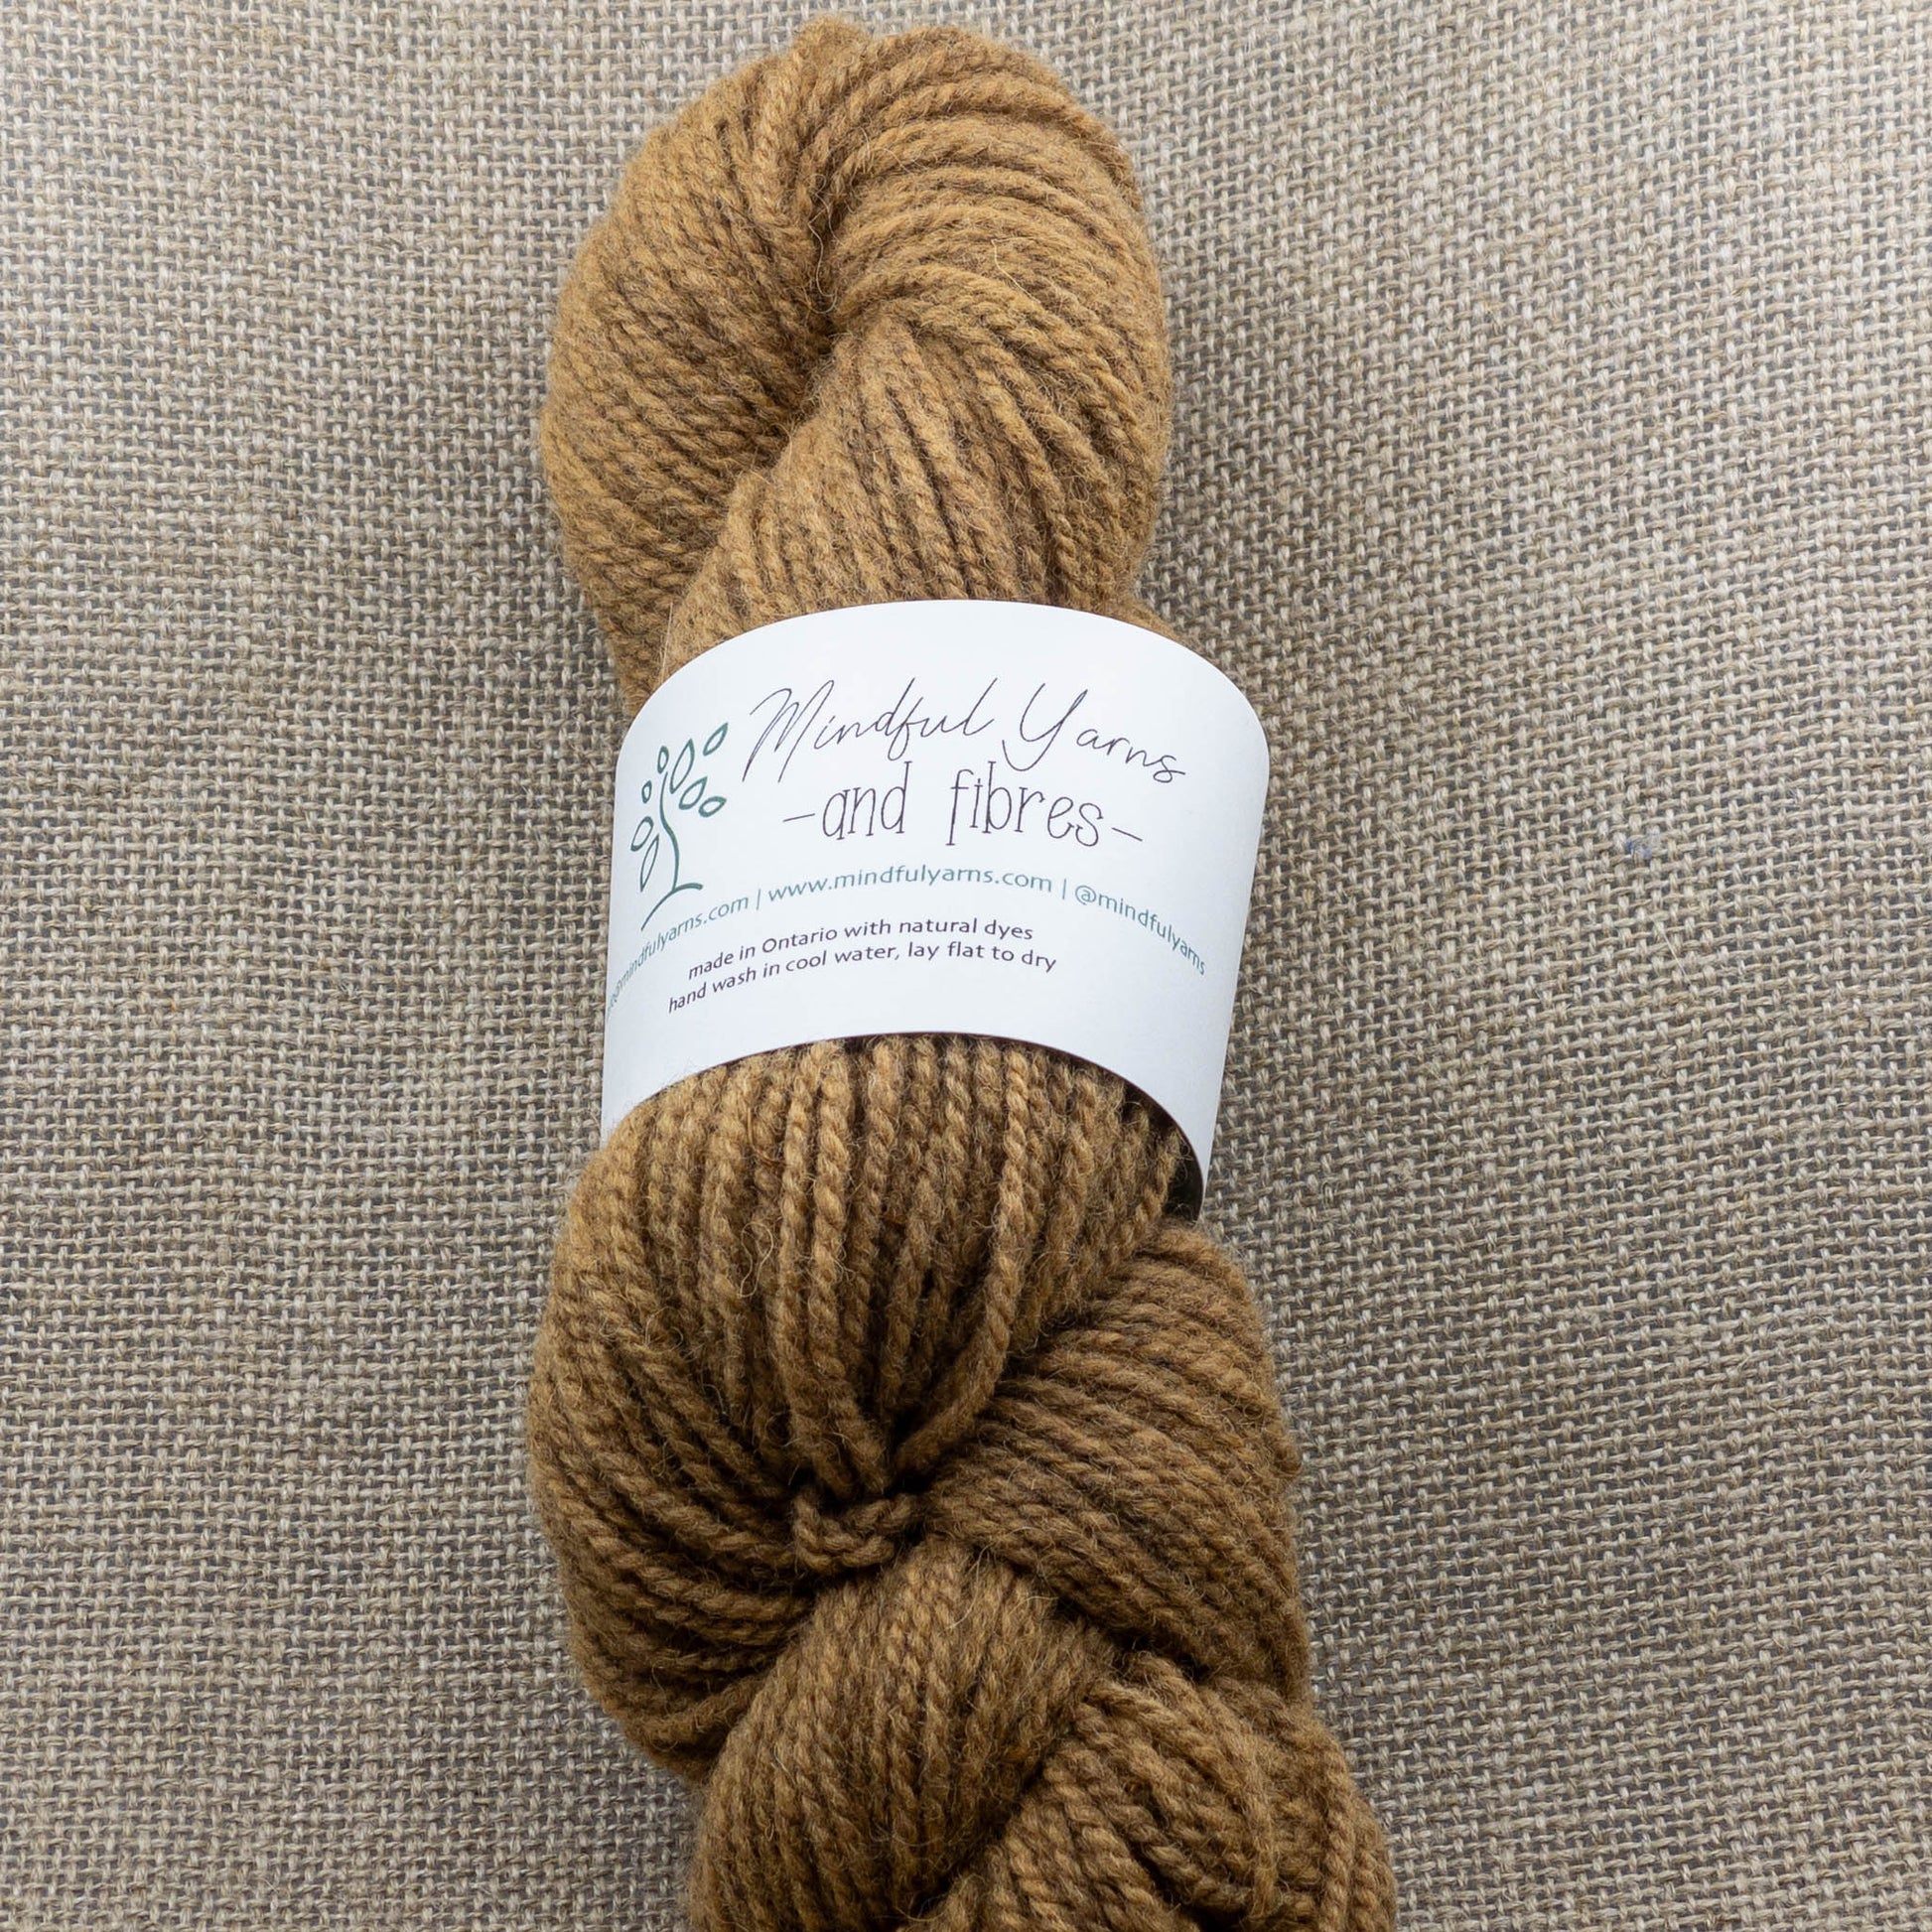 Ontario Dorset Wool - worsted weight - Mindful Yarns - Cutch 30-0711